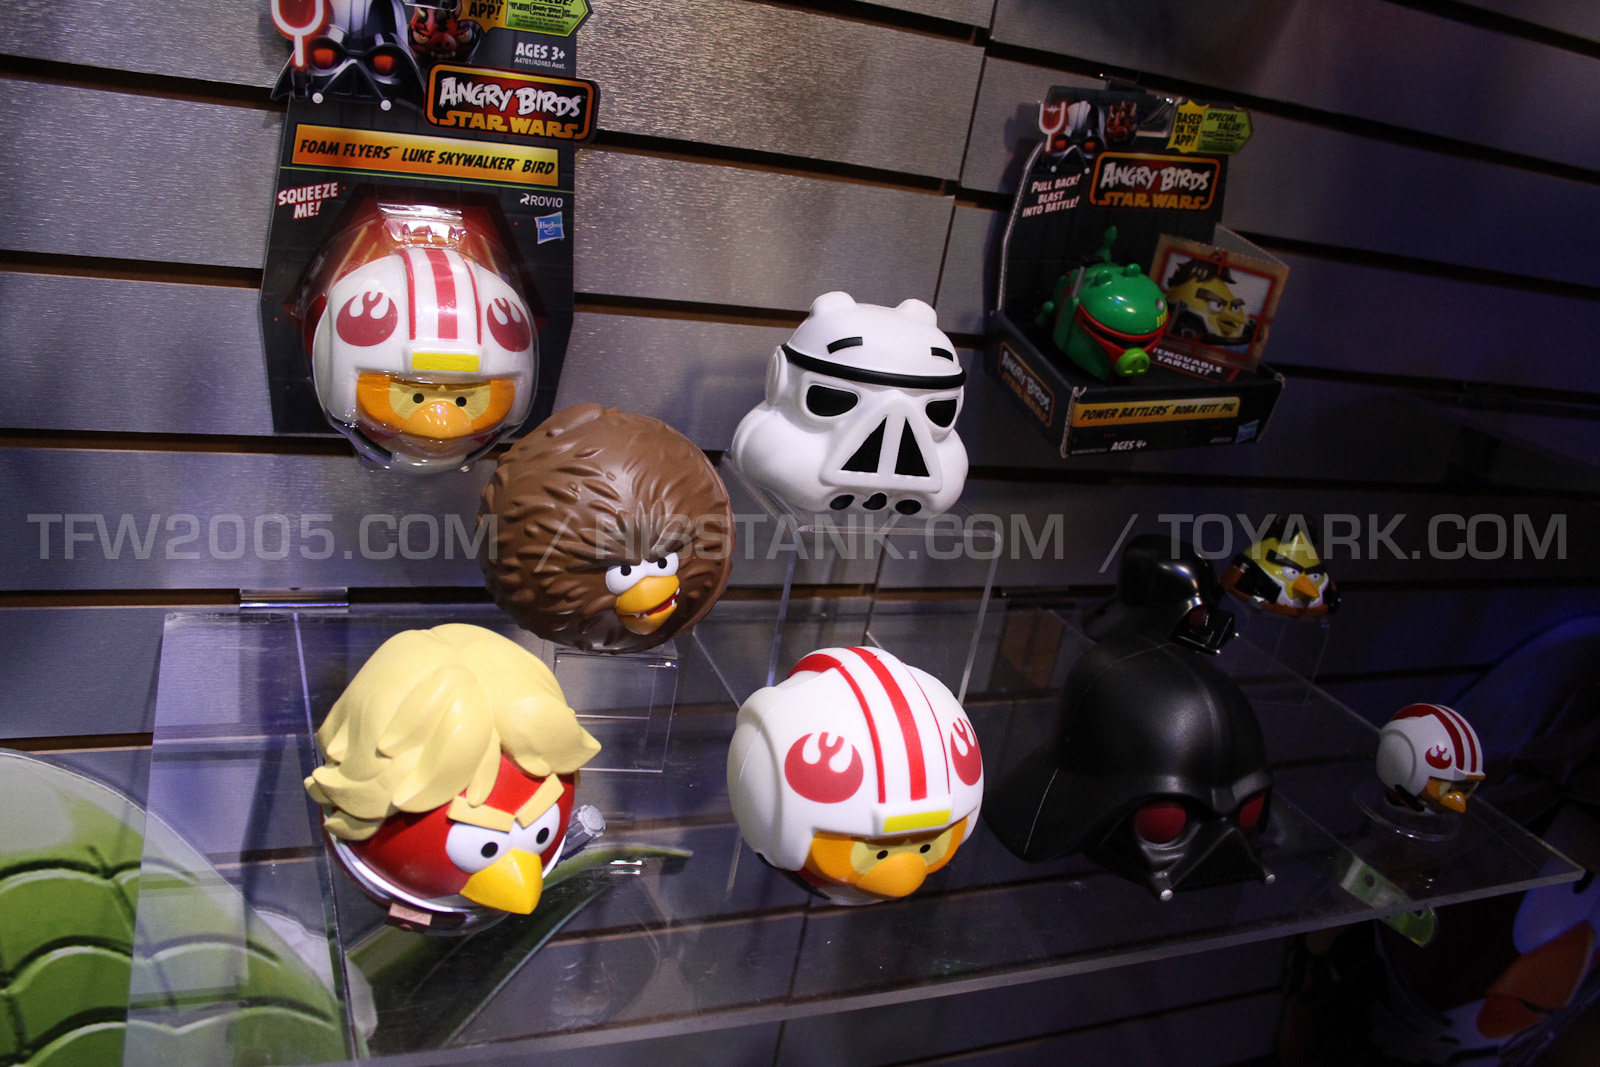 https://blogger.googleusercontent.com/img/b/R29vZ2xl/AVvXsEg372wA6YorPjX9g0USQg22VTNbrK1jNTn5H_rpt6LTKY7g3RvnbeXbca60htFsyjpMQd3bY6pnhrHgWf53gmgQ6YuAmznbvABuqIgy0TkgTUoeUdaqmUiWifEWzbdXKzDW4ygkJ0x8mLo/s1600/Angry-Birds-Star-Wars-Toy-Fair-2013-006_1360451092.jpg